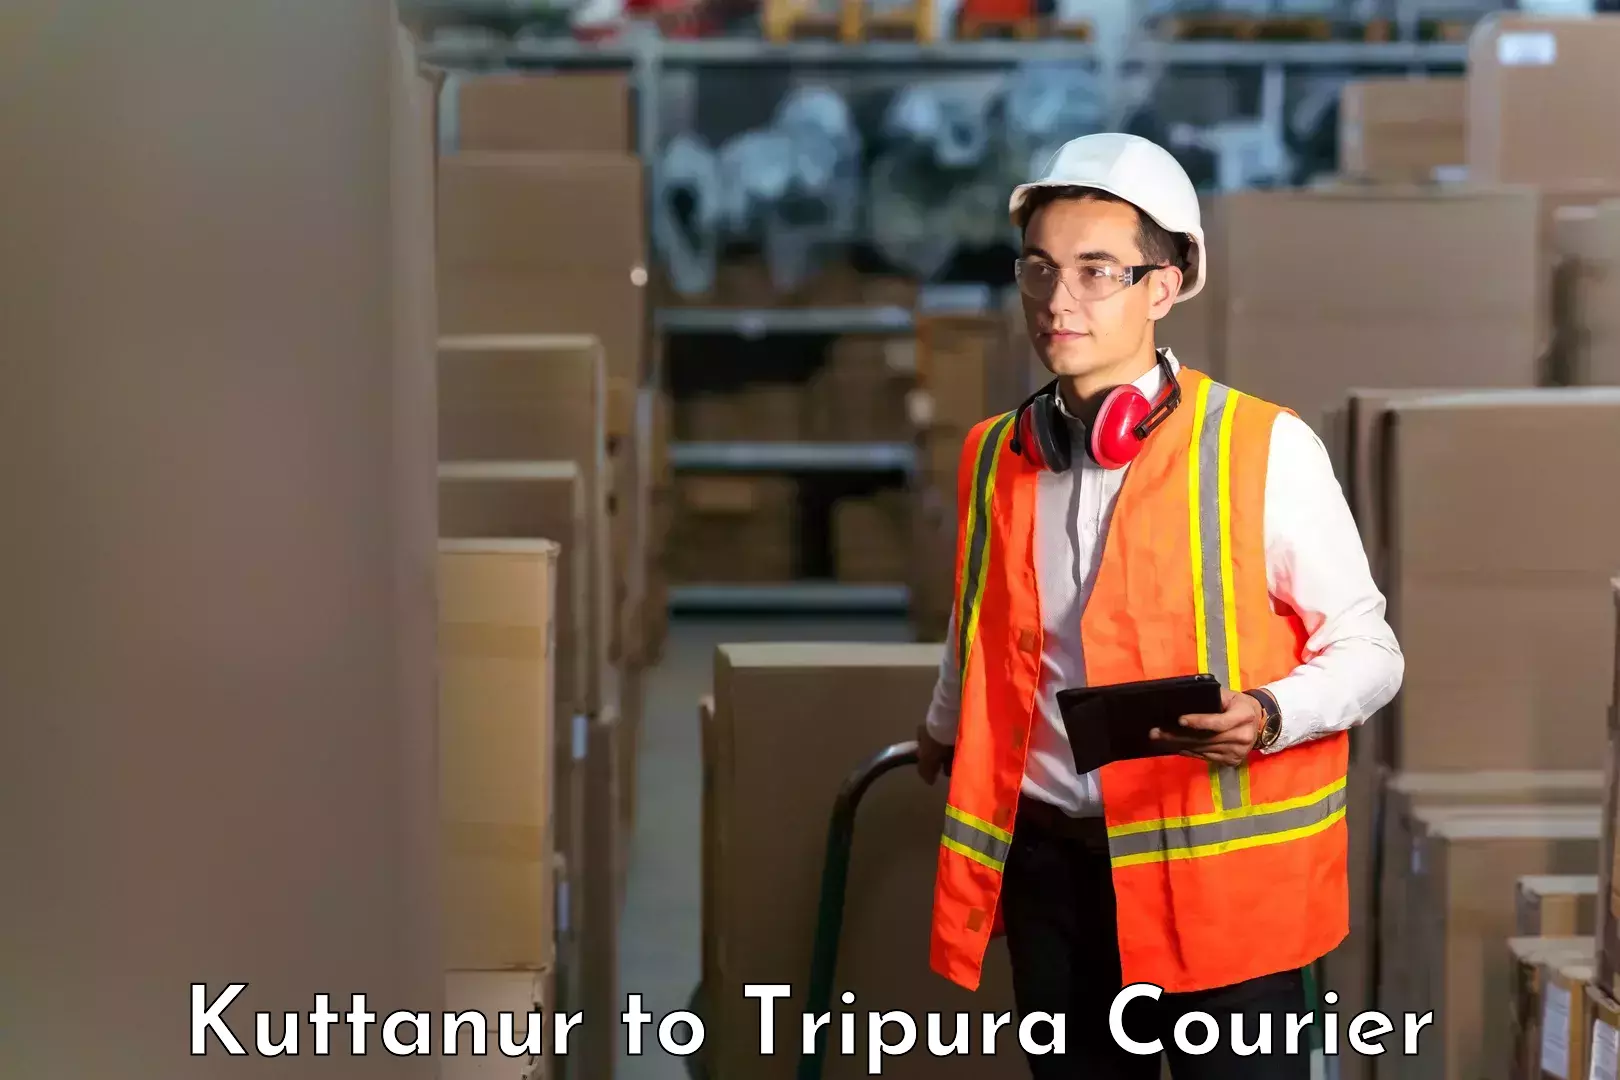 Courier service comparison Kuttanur to Tripura